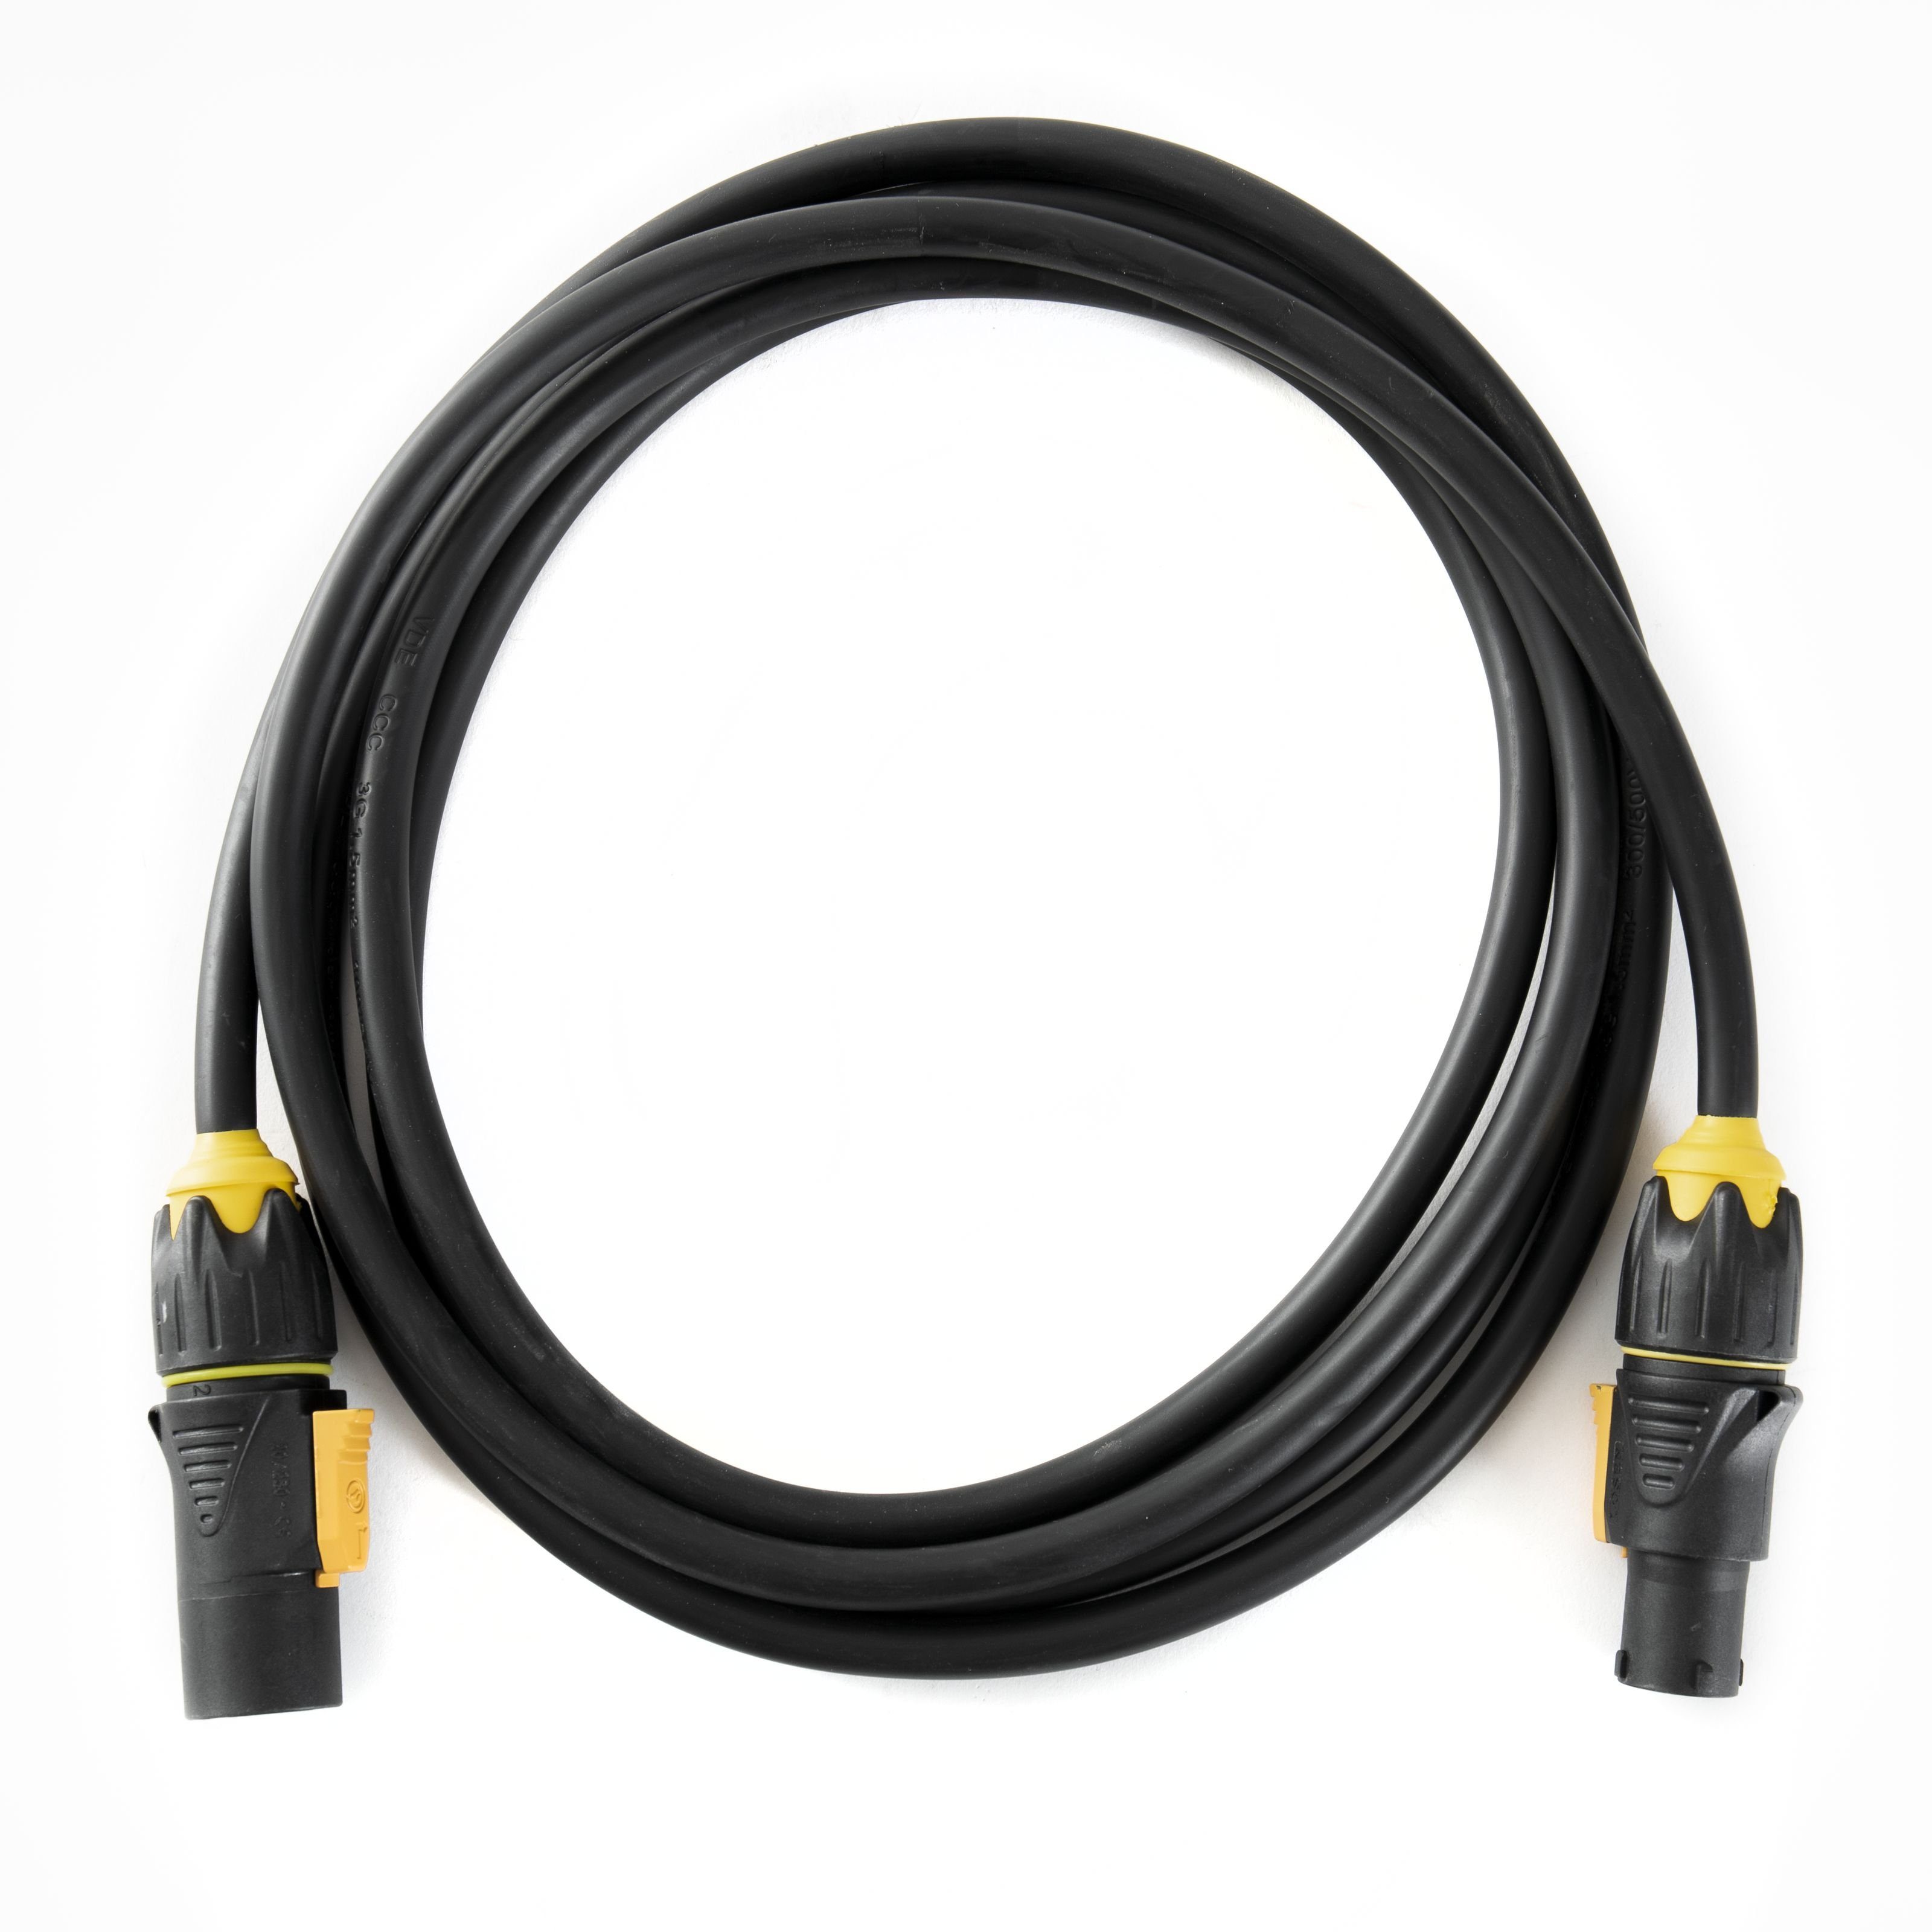 PURElight Audio-Kabel, Patchkabel, 3,0m, Hochwertiges Patchkabel, 3 x 2,5mm², Optimale Verb